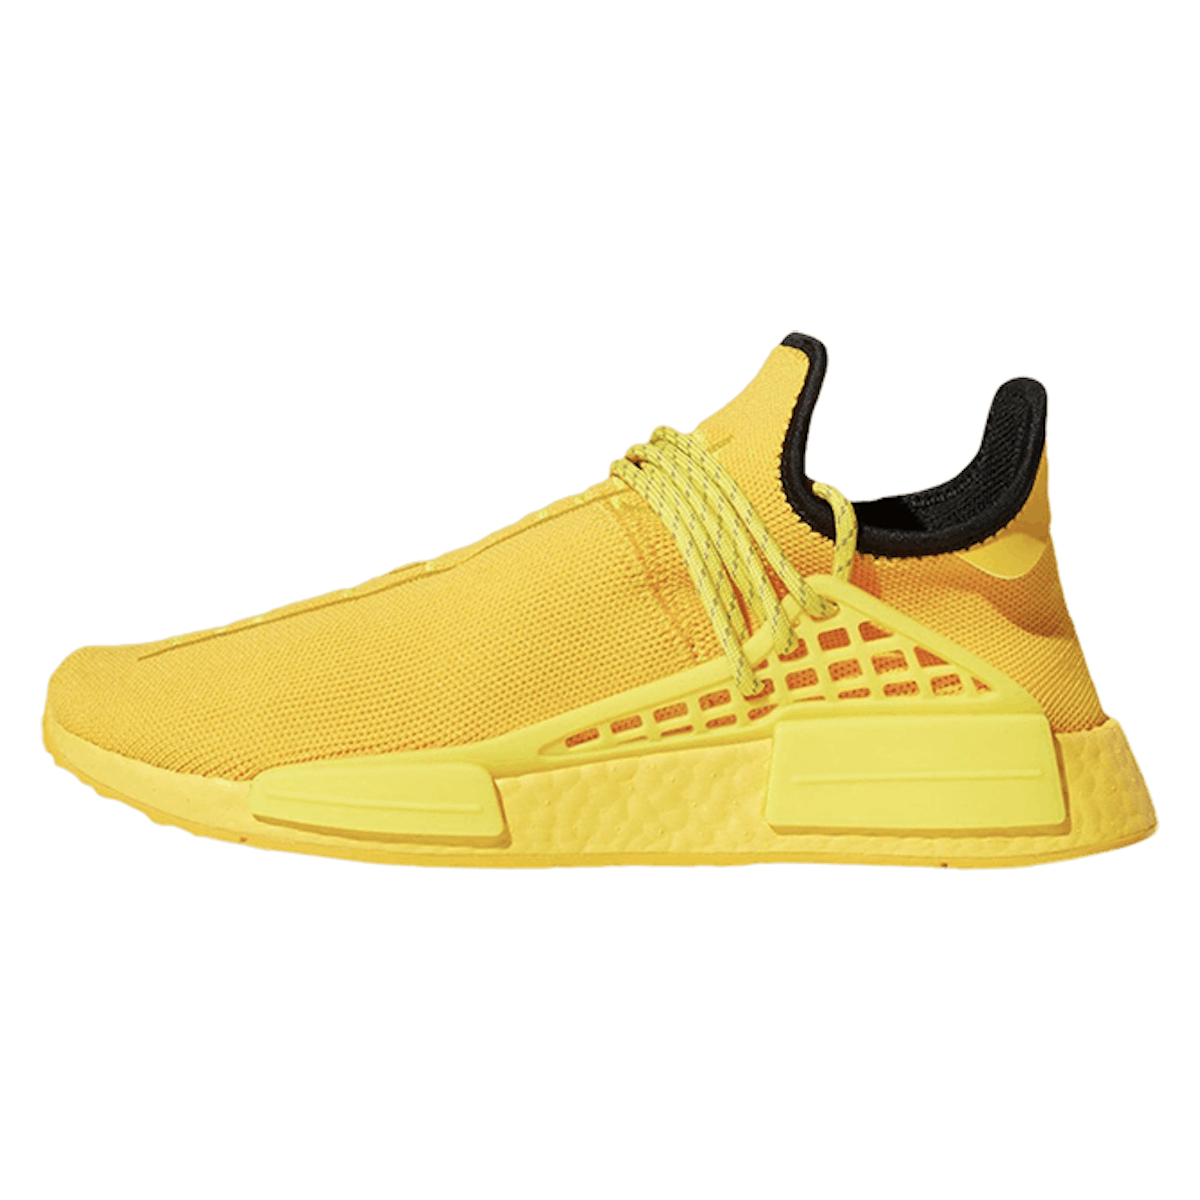 Pharrell x Adidas NMD Human Race "Yellow"